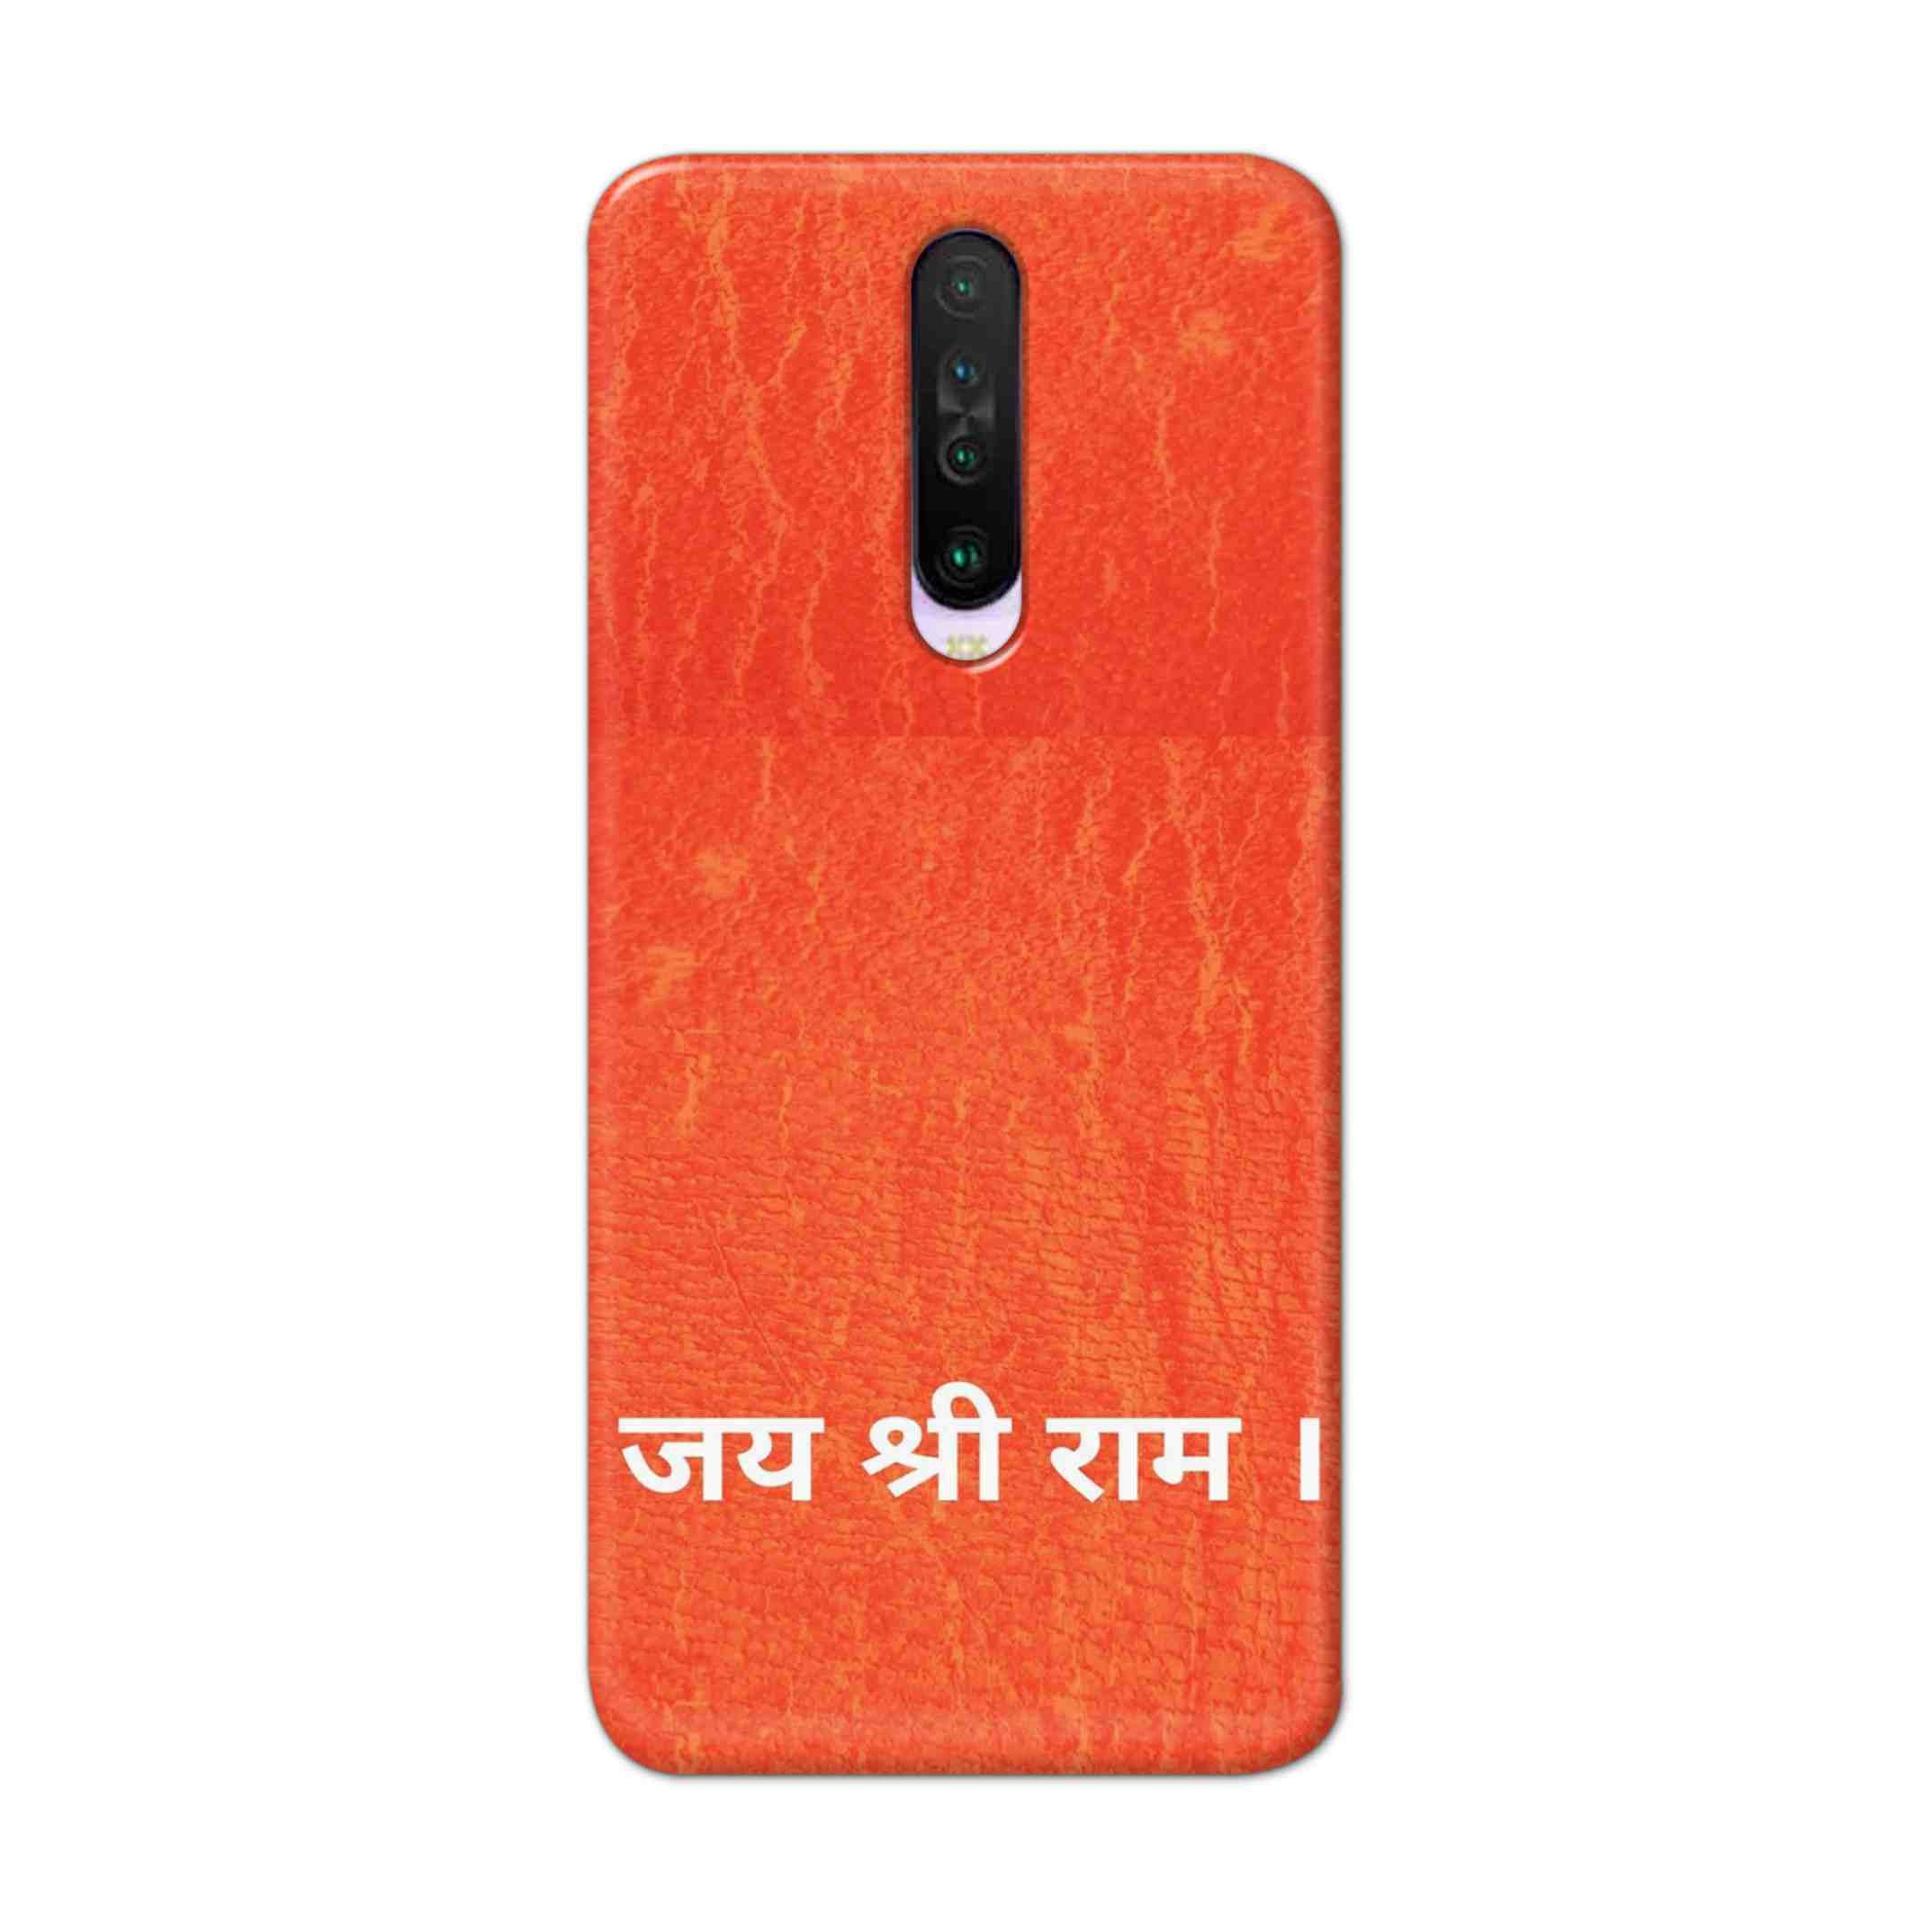 Buy Jai Shree Ram Hard Back Mobile Phone Case Cover For Poco X2 Online